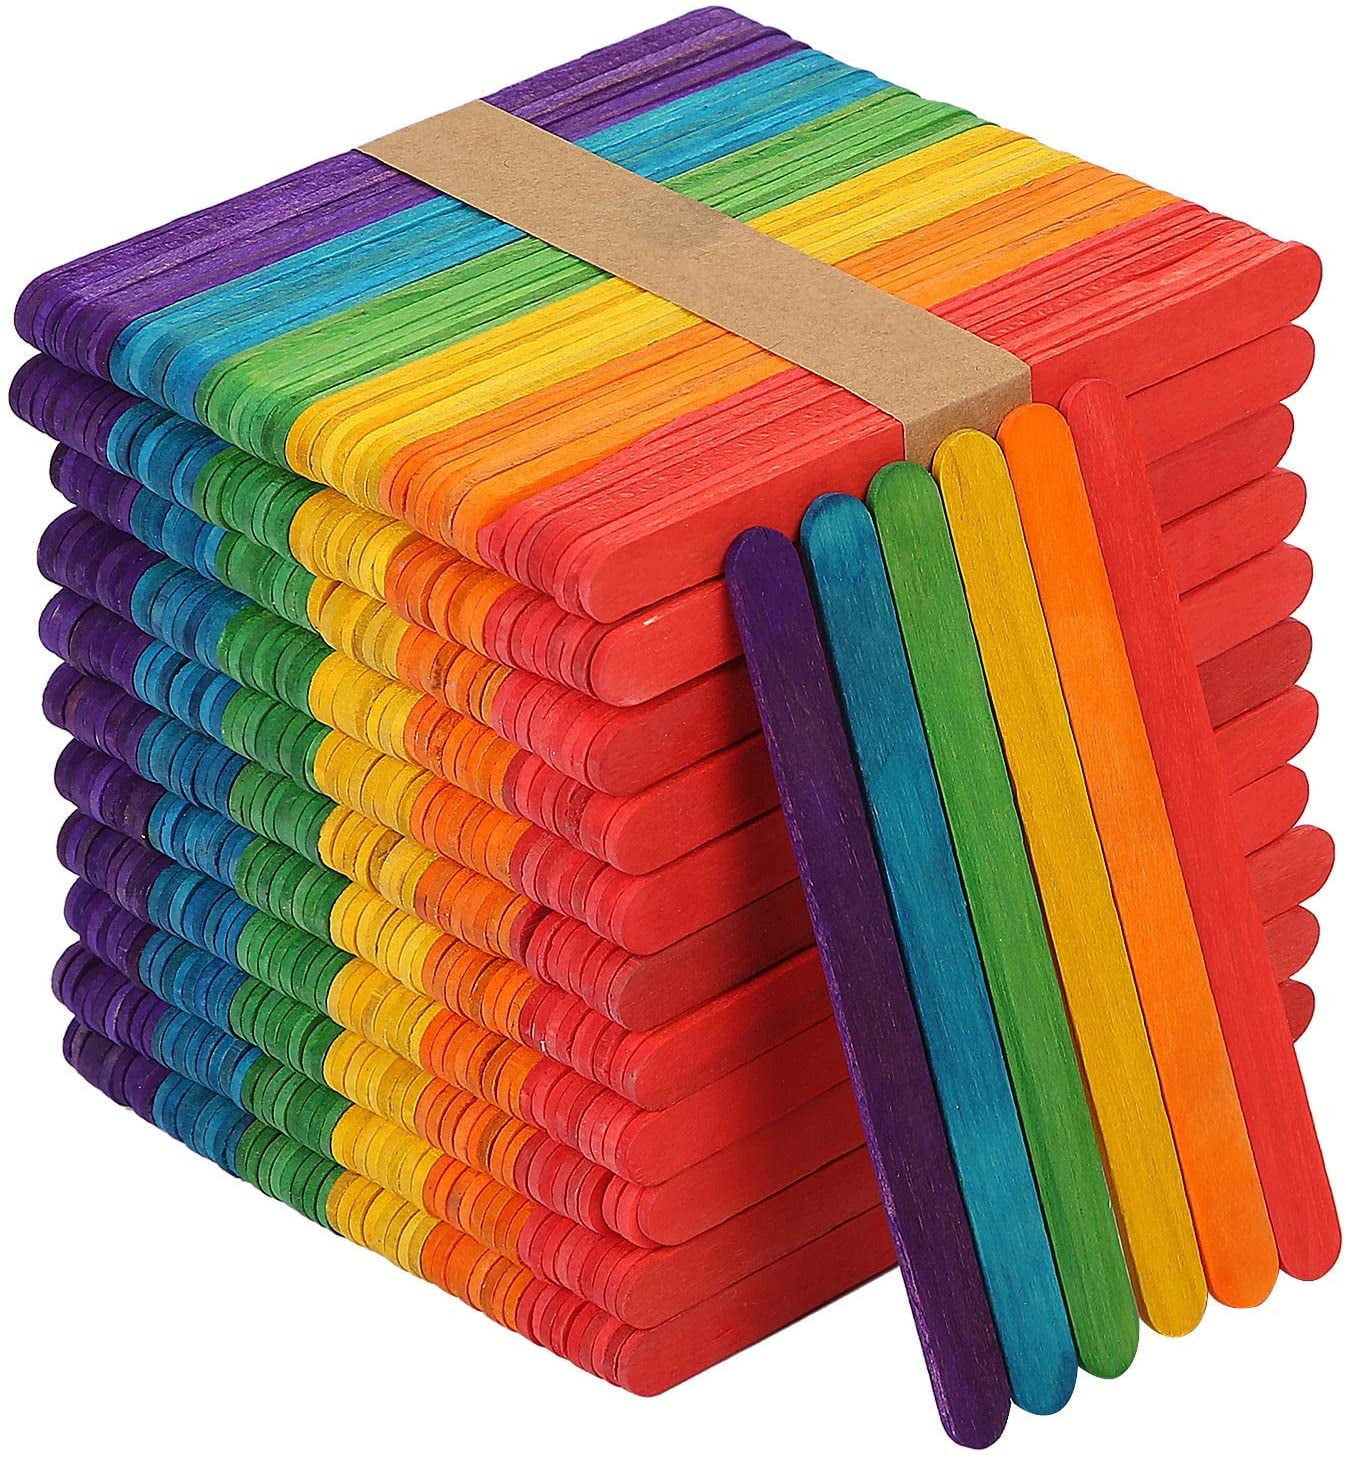 600pcs Wax Craft Sticks for Kids,13 Colors Wax Sticks,Bendable Sticky Wax Yarn Sticks,Reusable Molding Sculpting Sticks,Wax String with Storage Box